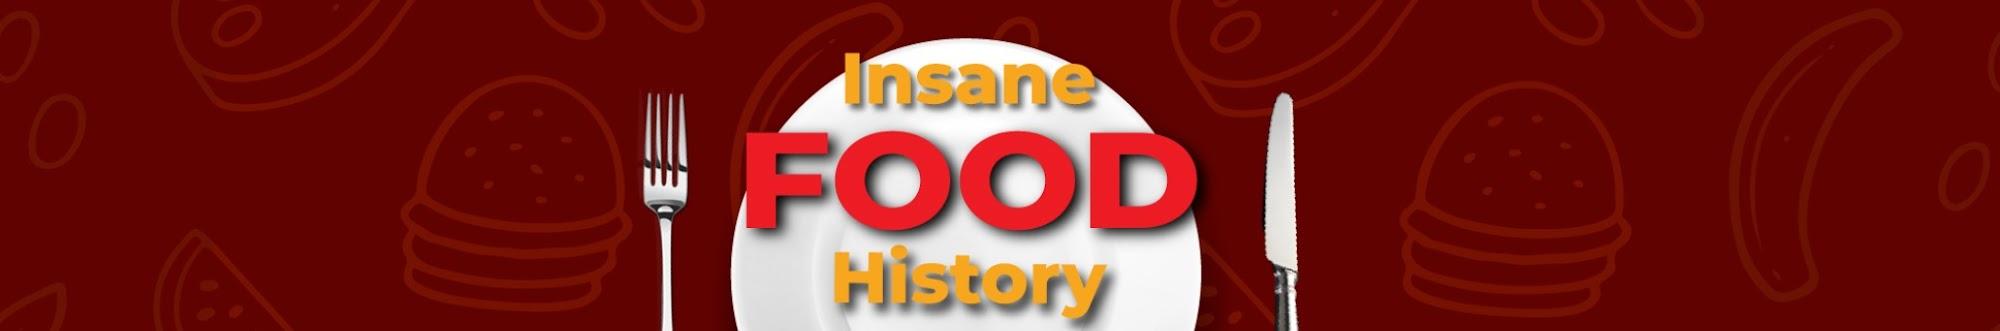 Insane Food History